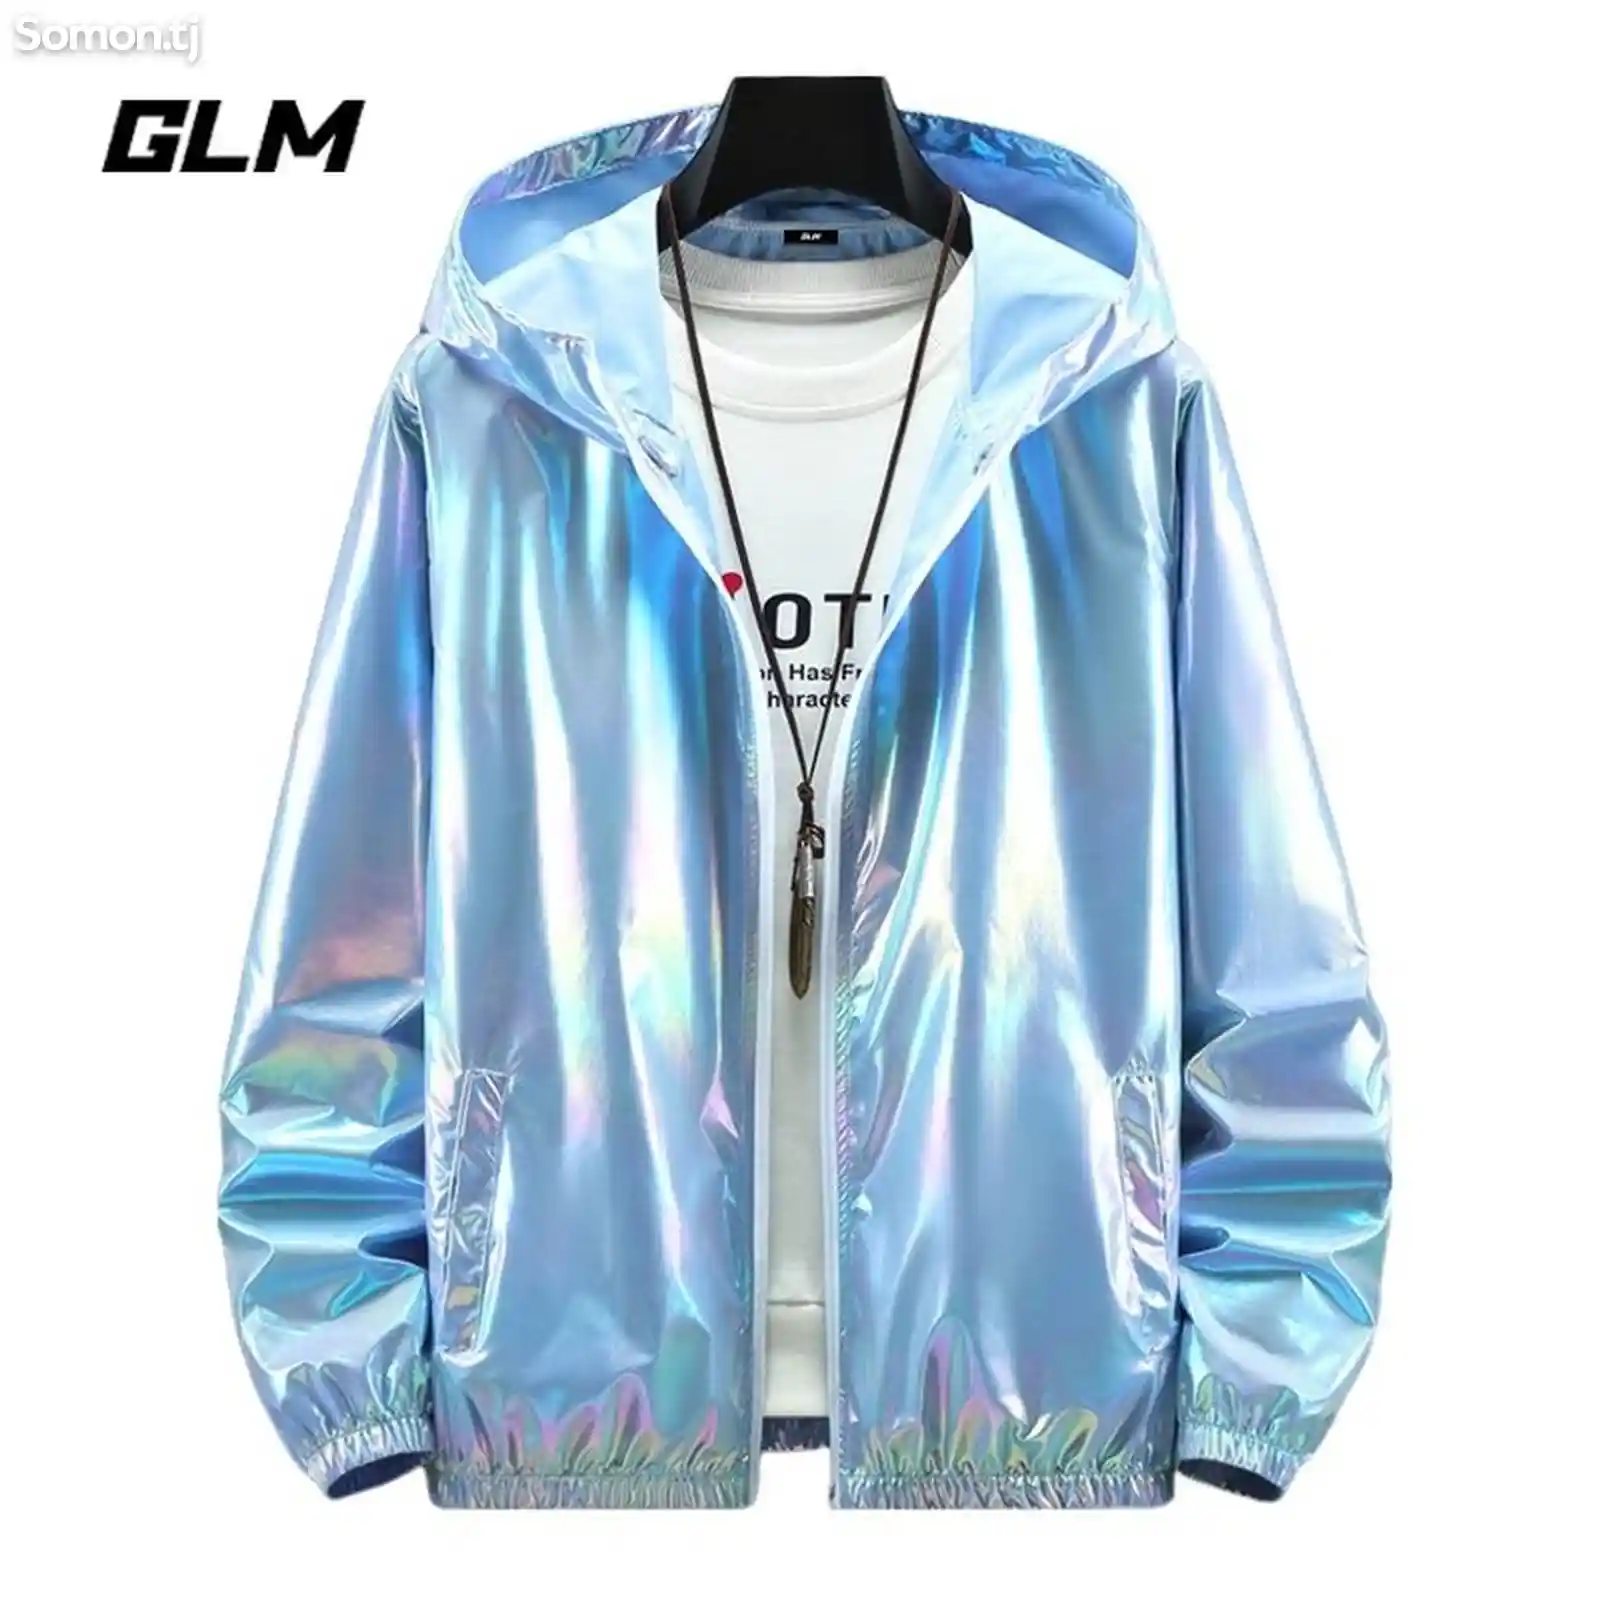 Солнцезащитная куртка GLM на заказ-2